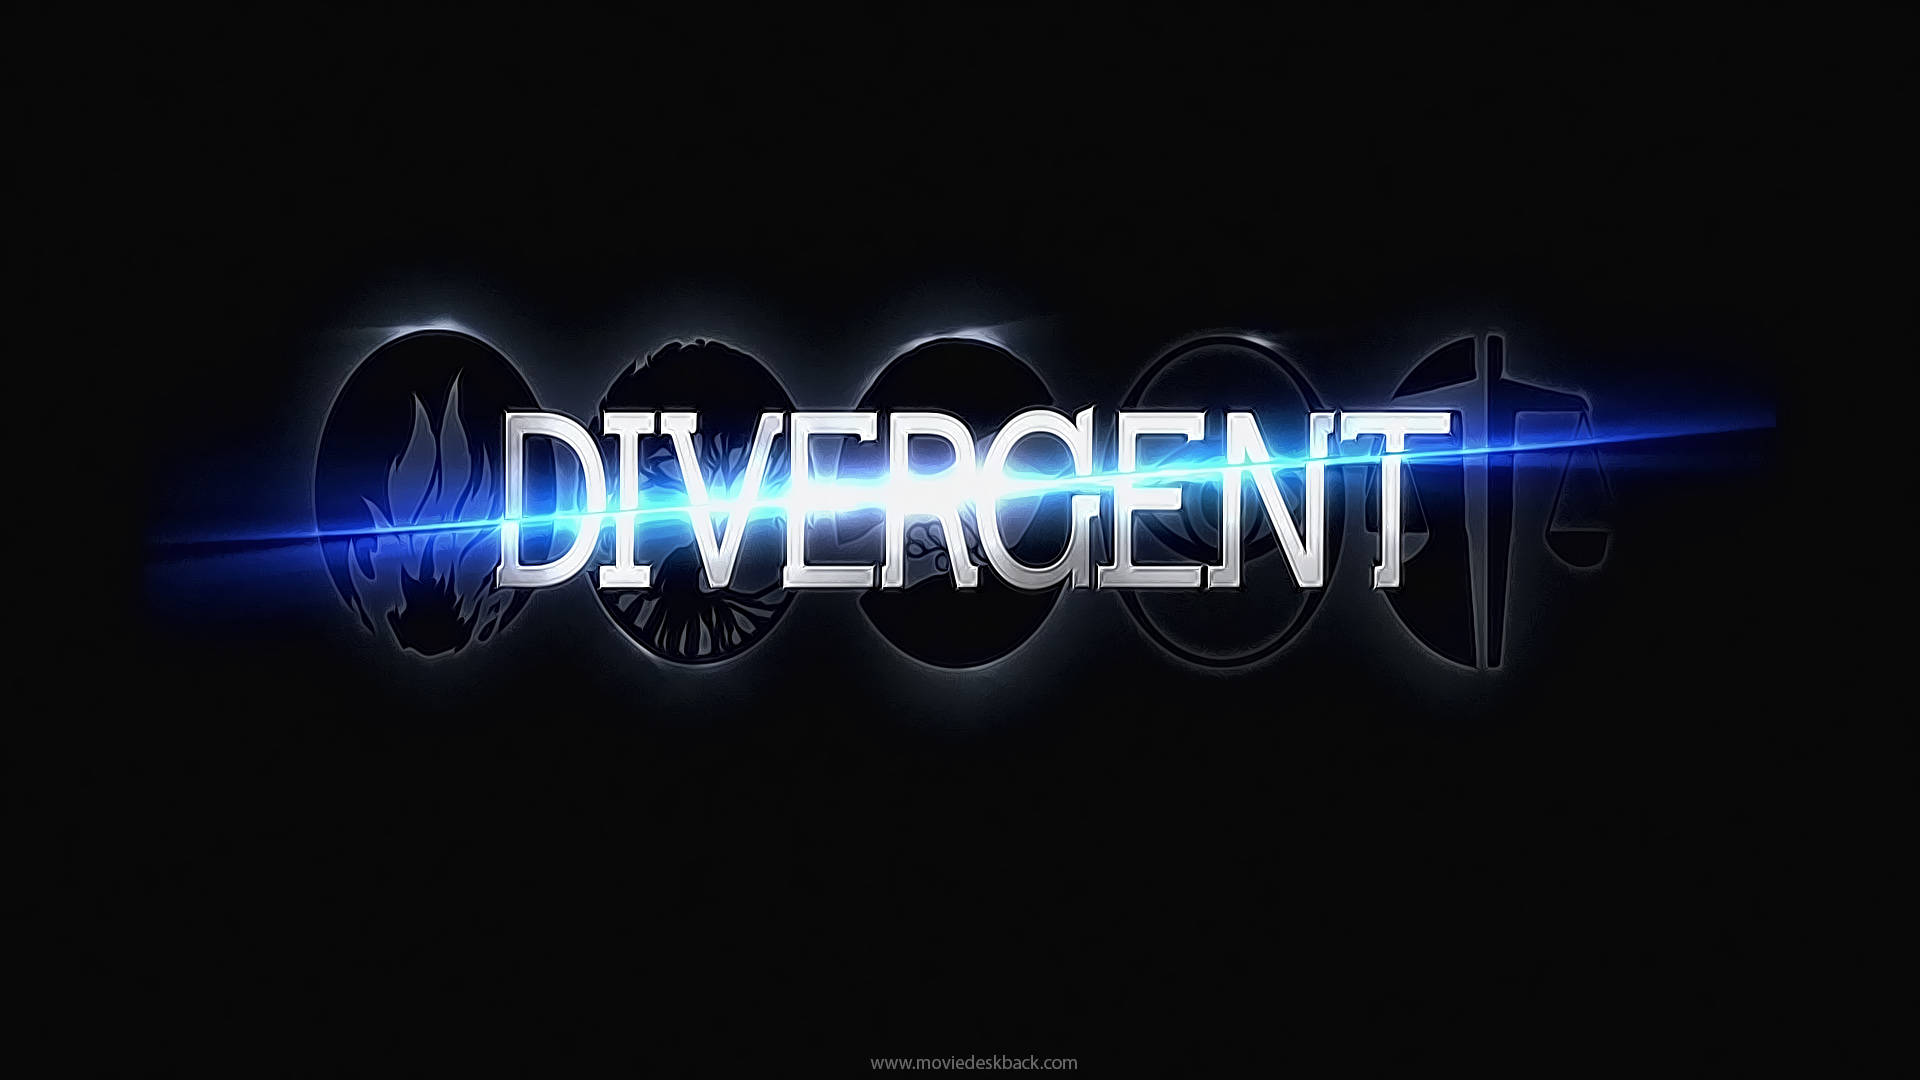 Divergent Title Movie Logo Poster Wallpaper